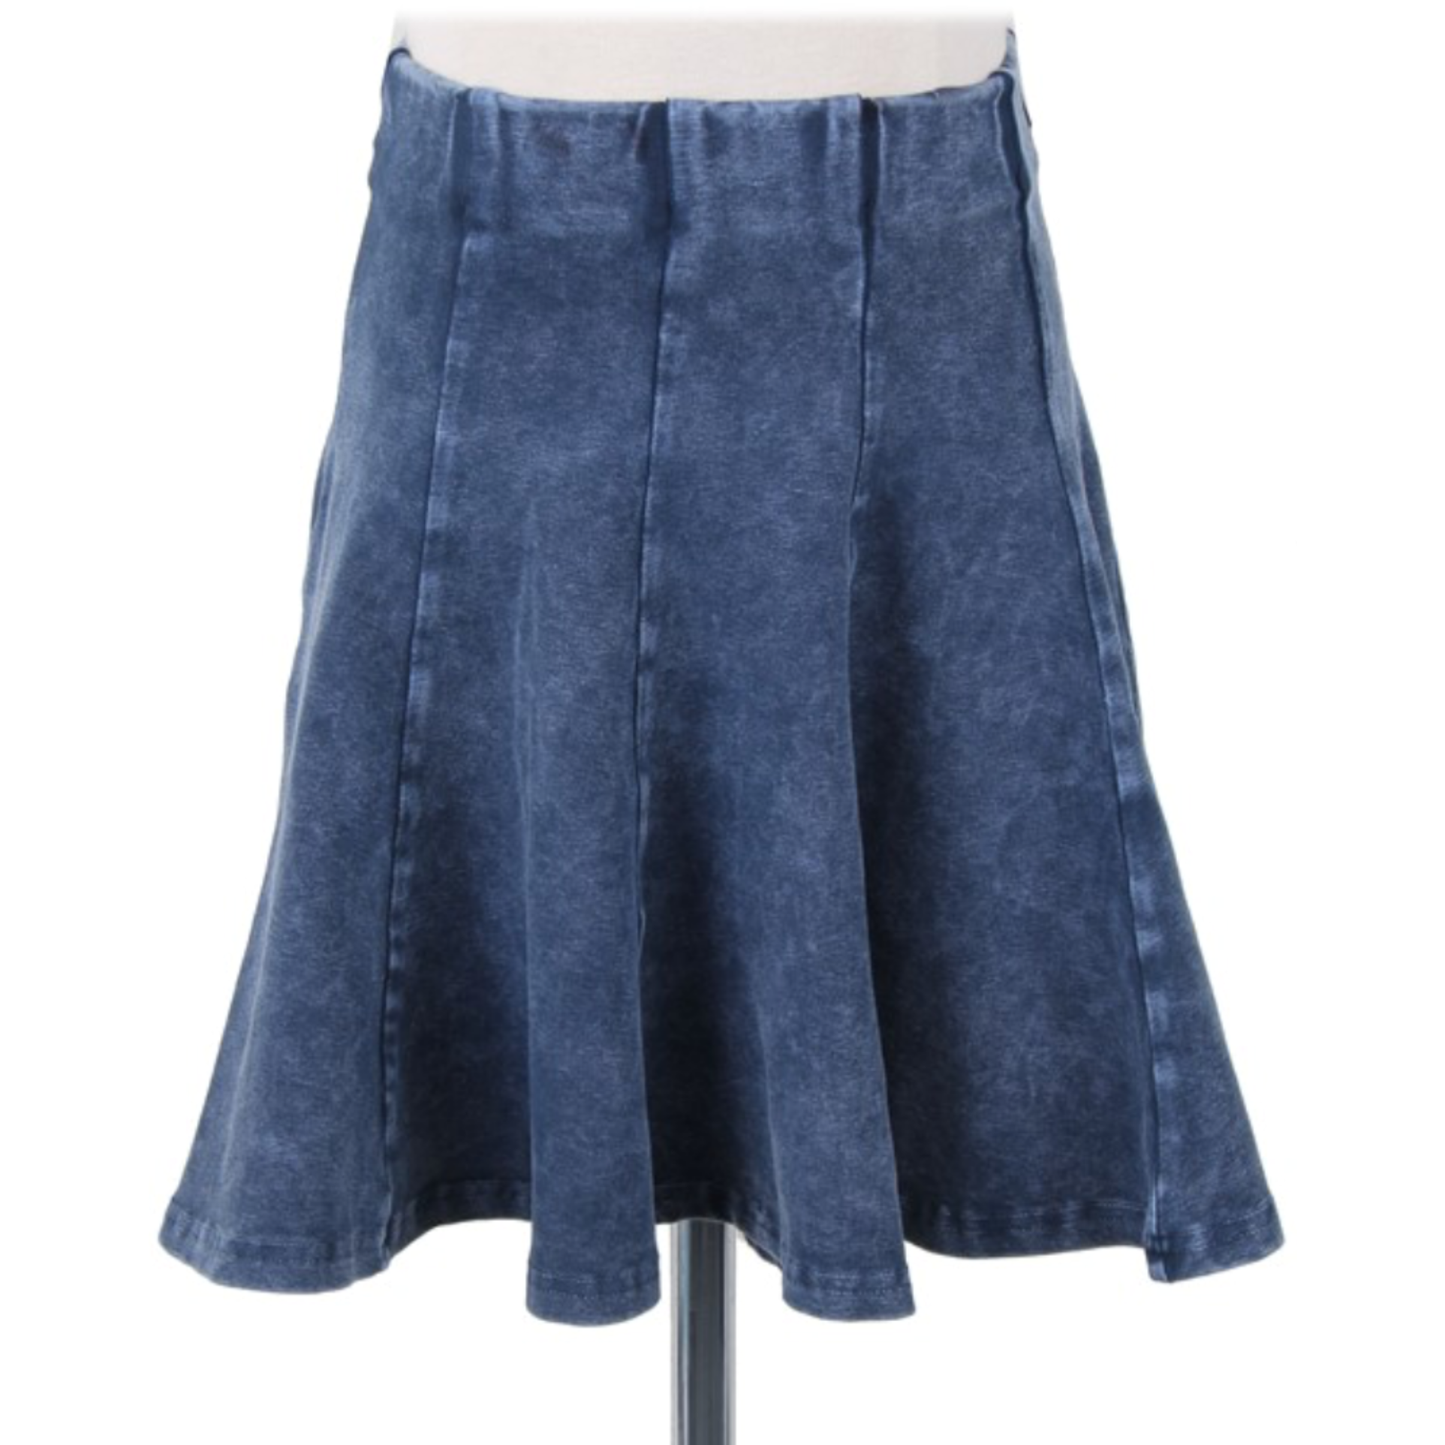 Kiki Riki Girls Mineral Wash Faux Denim Panel Skirt 41464 - Modest Necessities